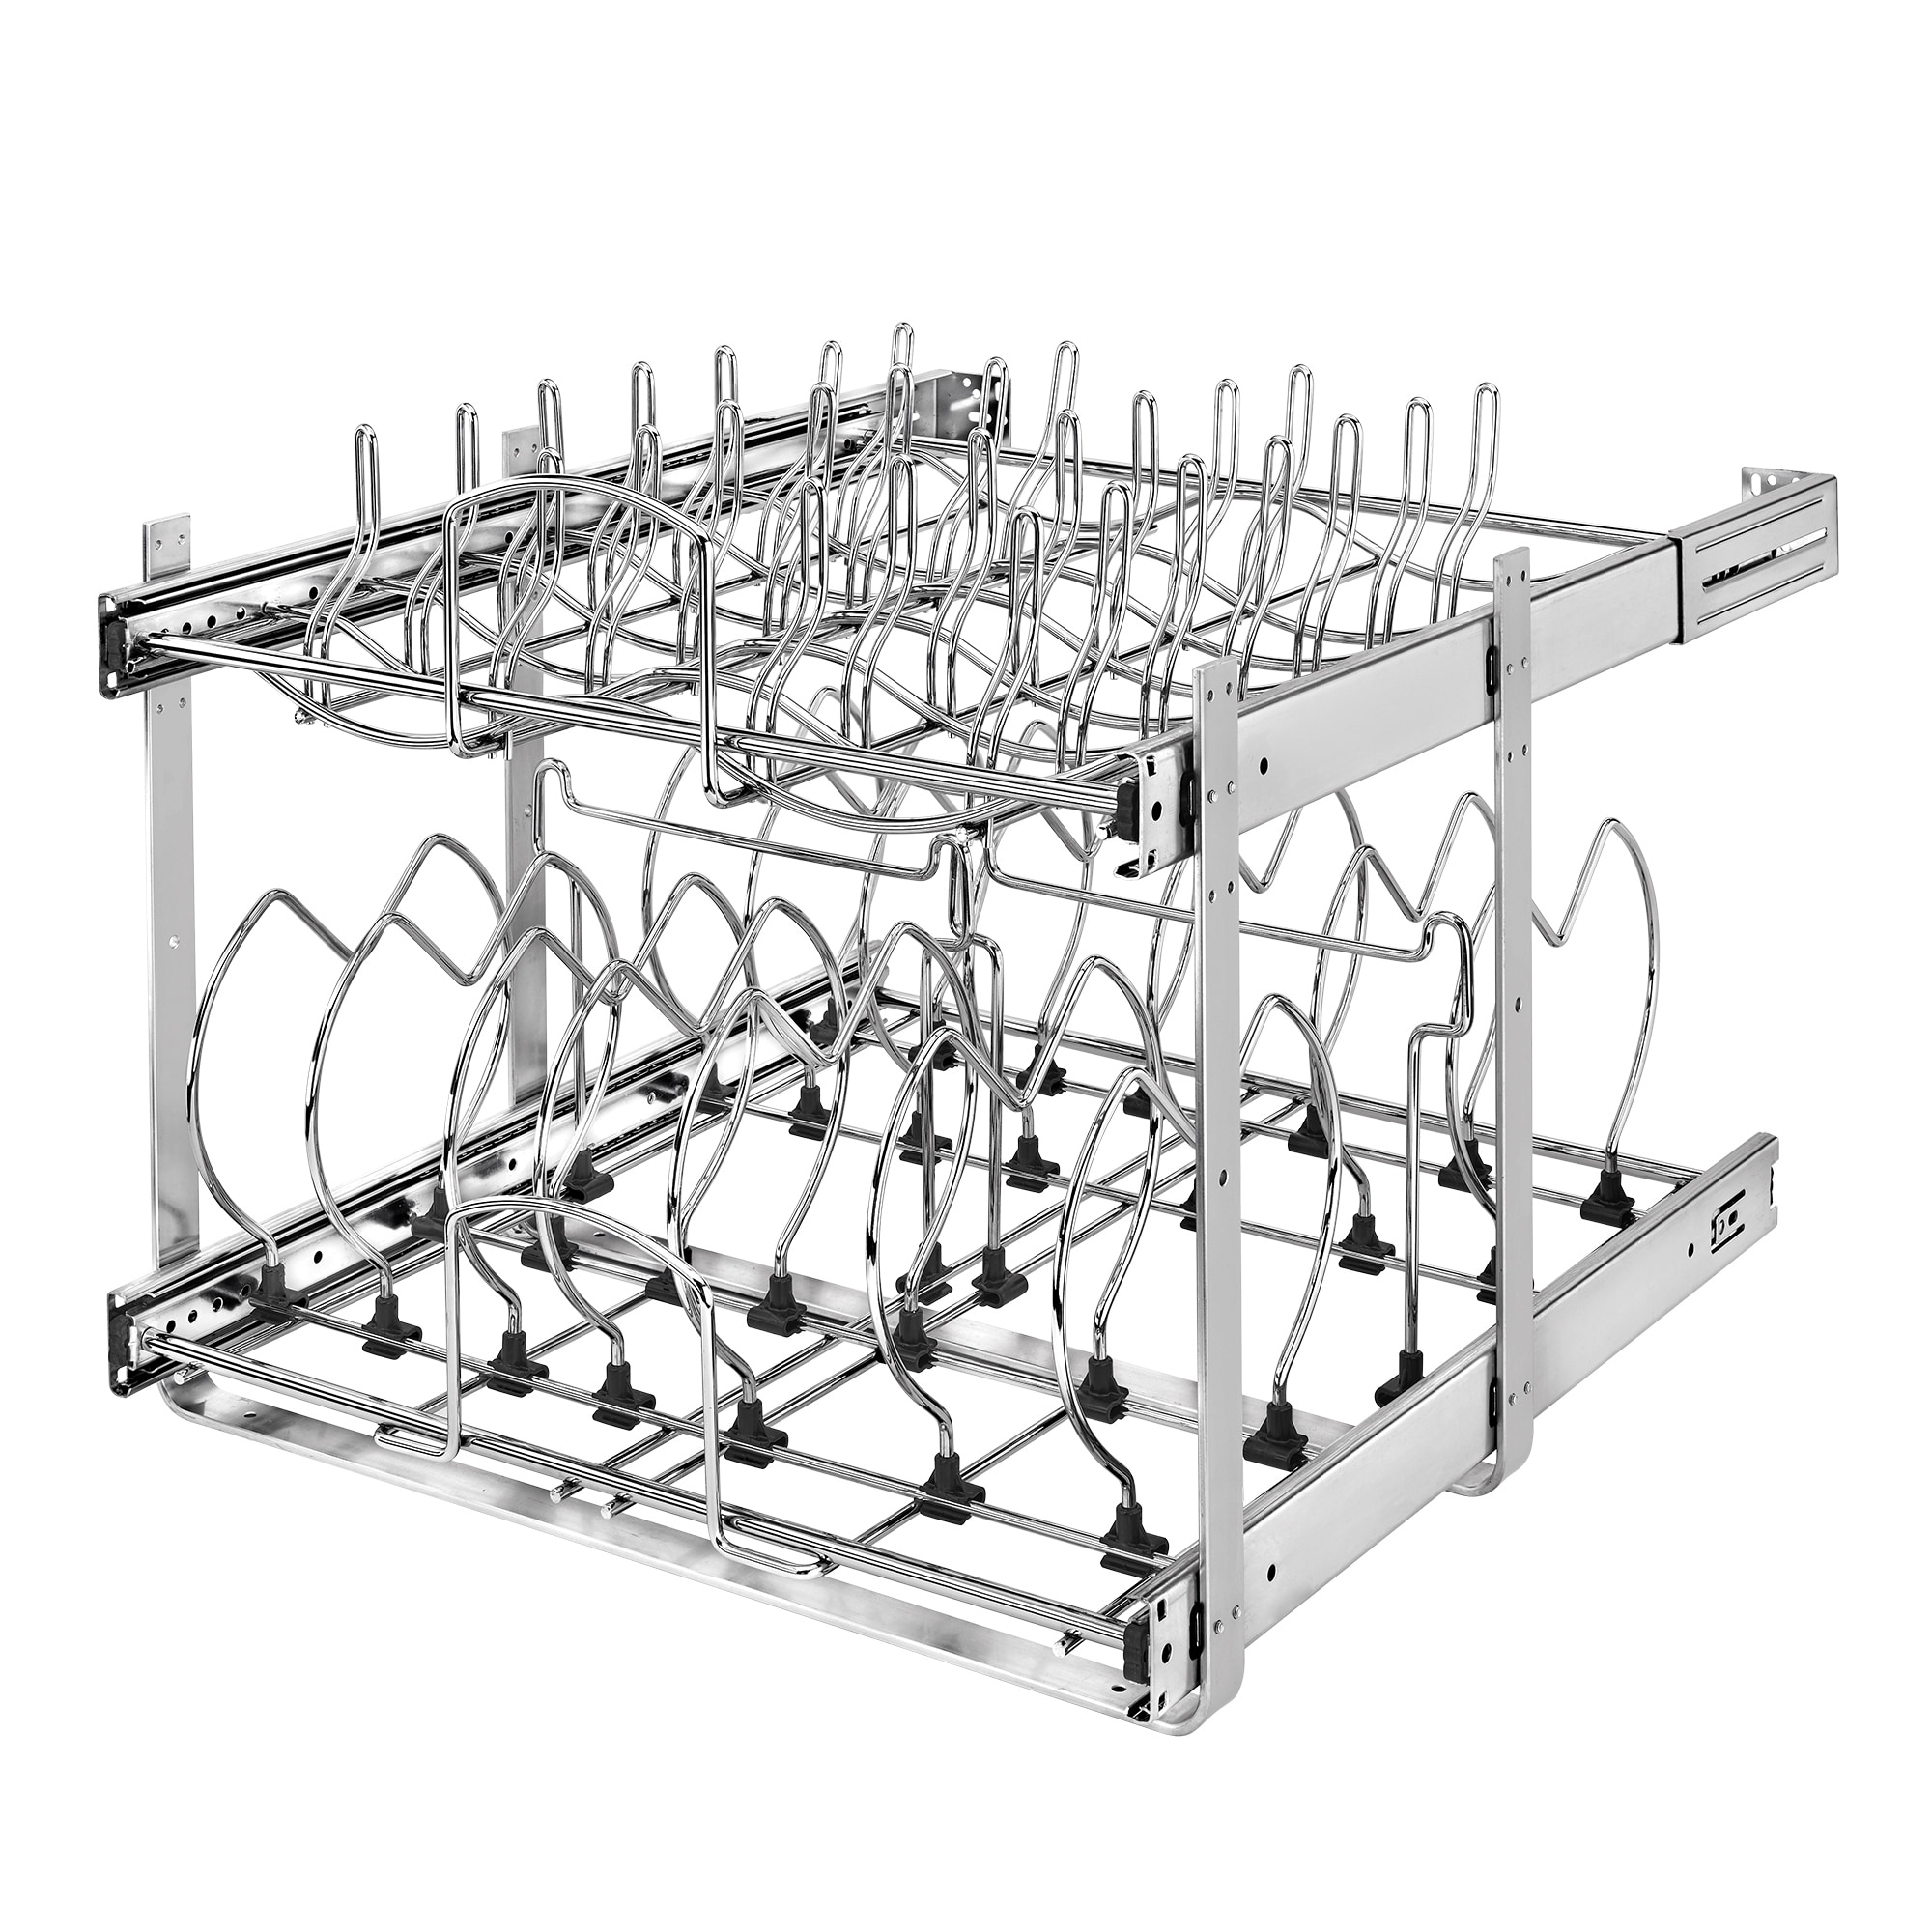 Y-Rack™ 2-tier Dish Rack - Gray